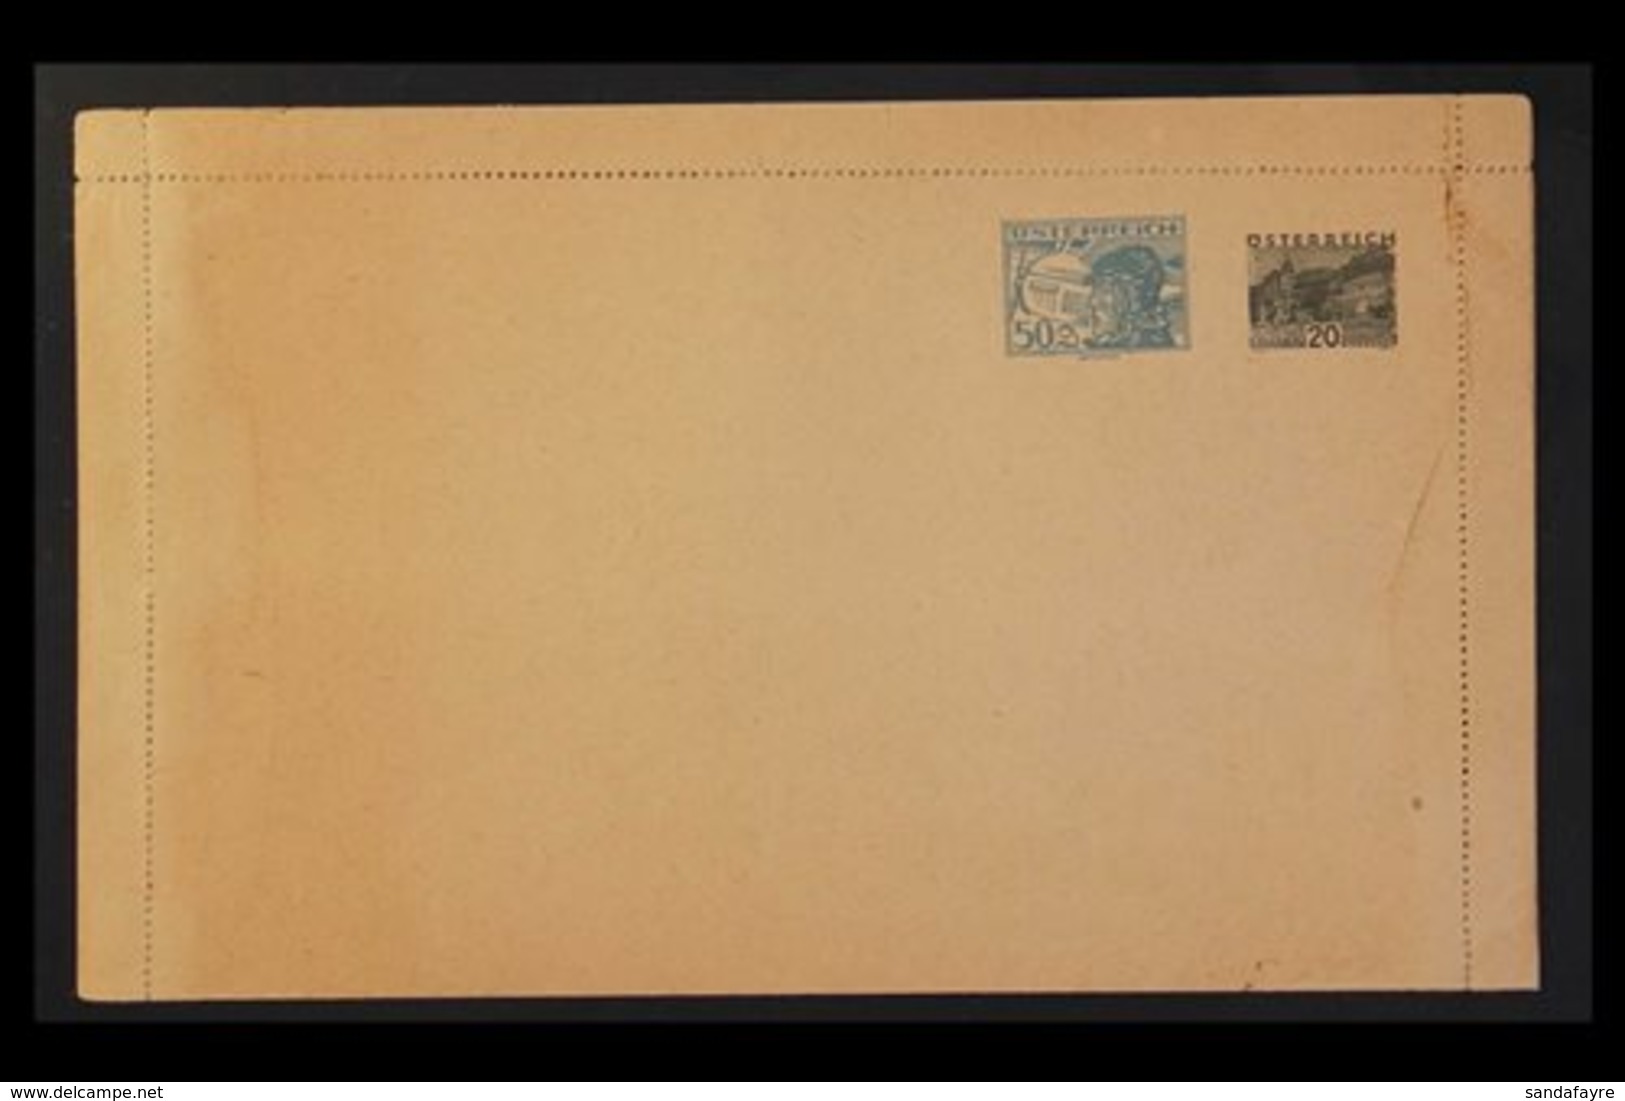 POSTAL STATIONERY 1933-34 50g+20g Letter Sheet, Kessler 301, Unused, Minor Light Staining. Scarce! For More Images, Plea - Other & Unclassified